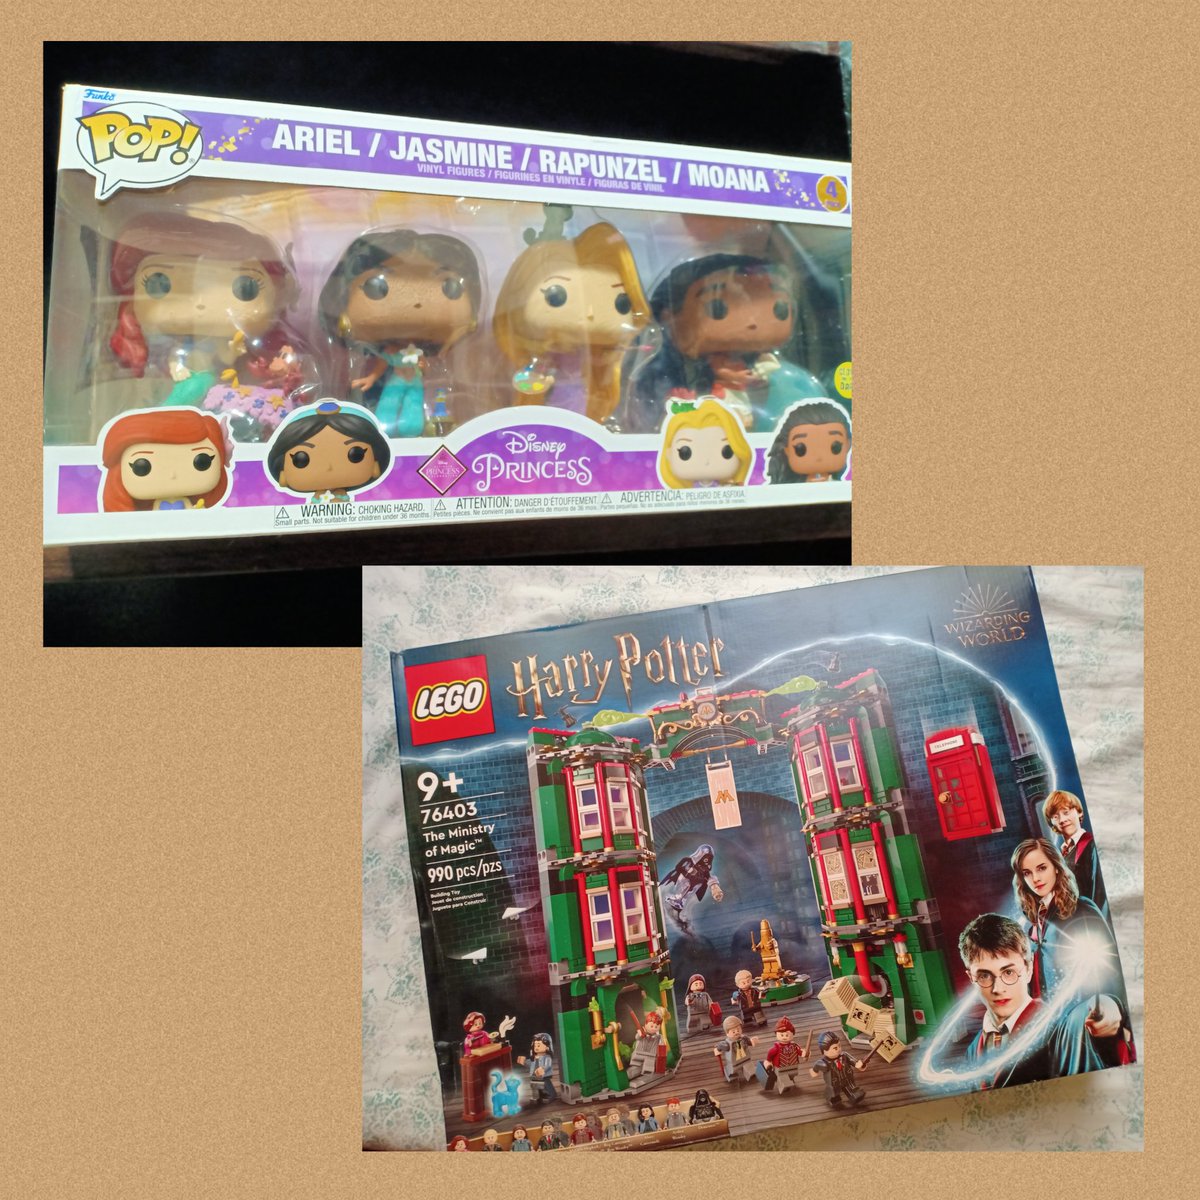 The Ministry Of Magic Lego set and Disney Princesses Ariel, Jasmine, Rapunzel and Moana Funko Pops.. from Mama & Papa. 🤩😍🥰

#disneyprincess #thelittlemermaid #aladdinmovie #tangledmovie #moanamovie #harrypotter #ministryofmagic #funko #funkopop #lego